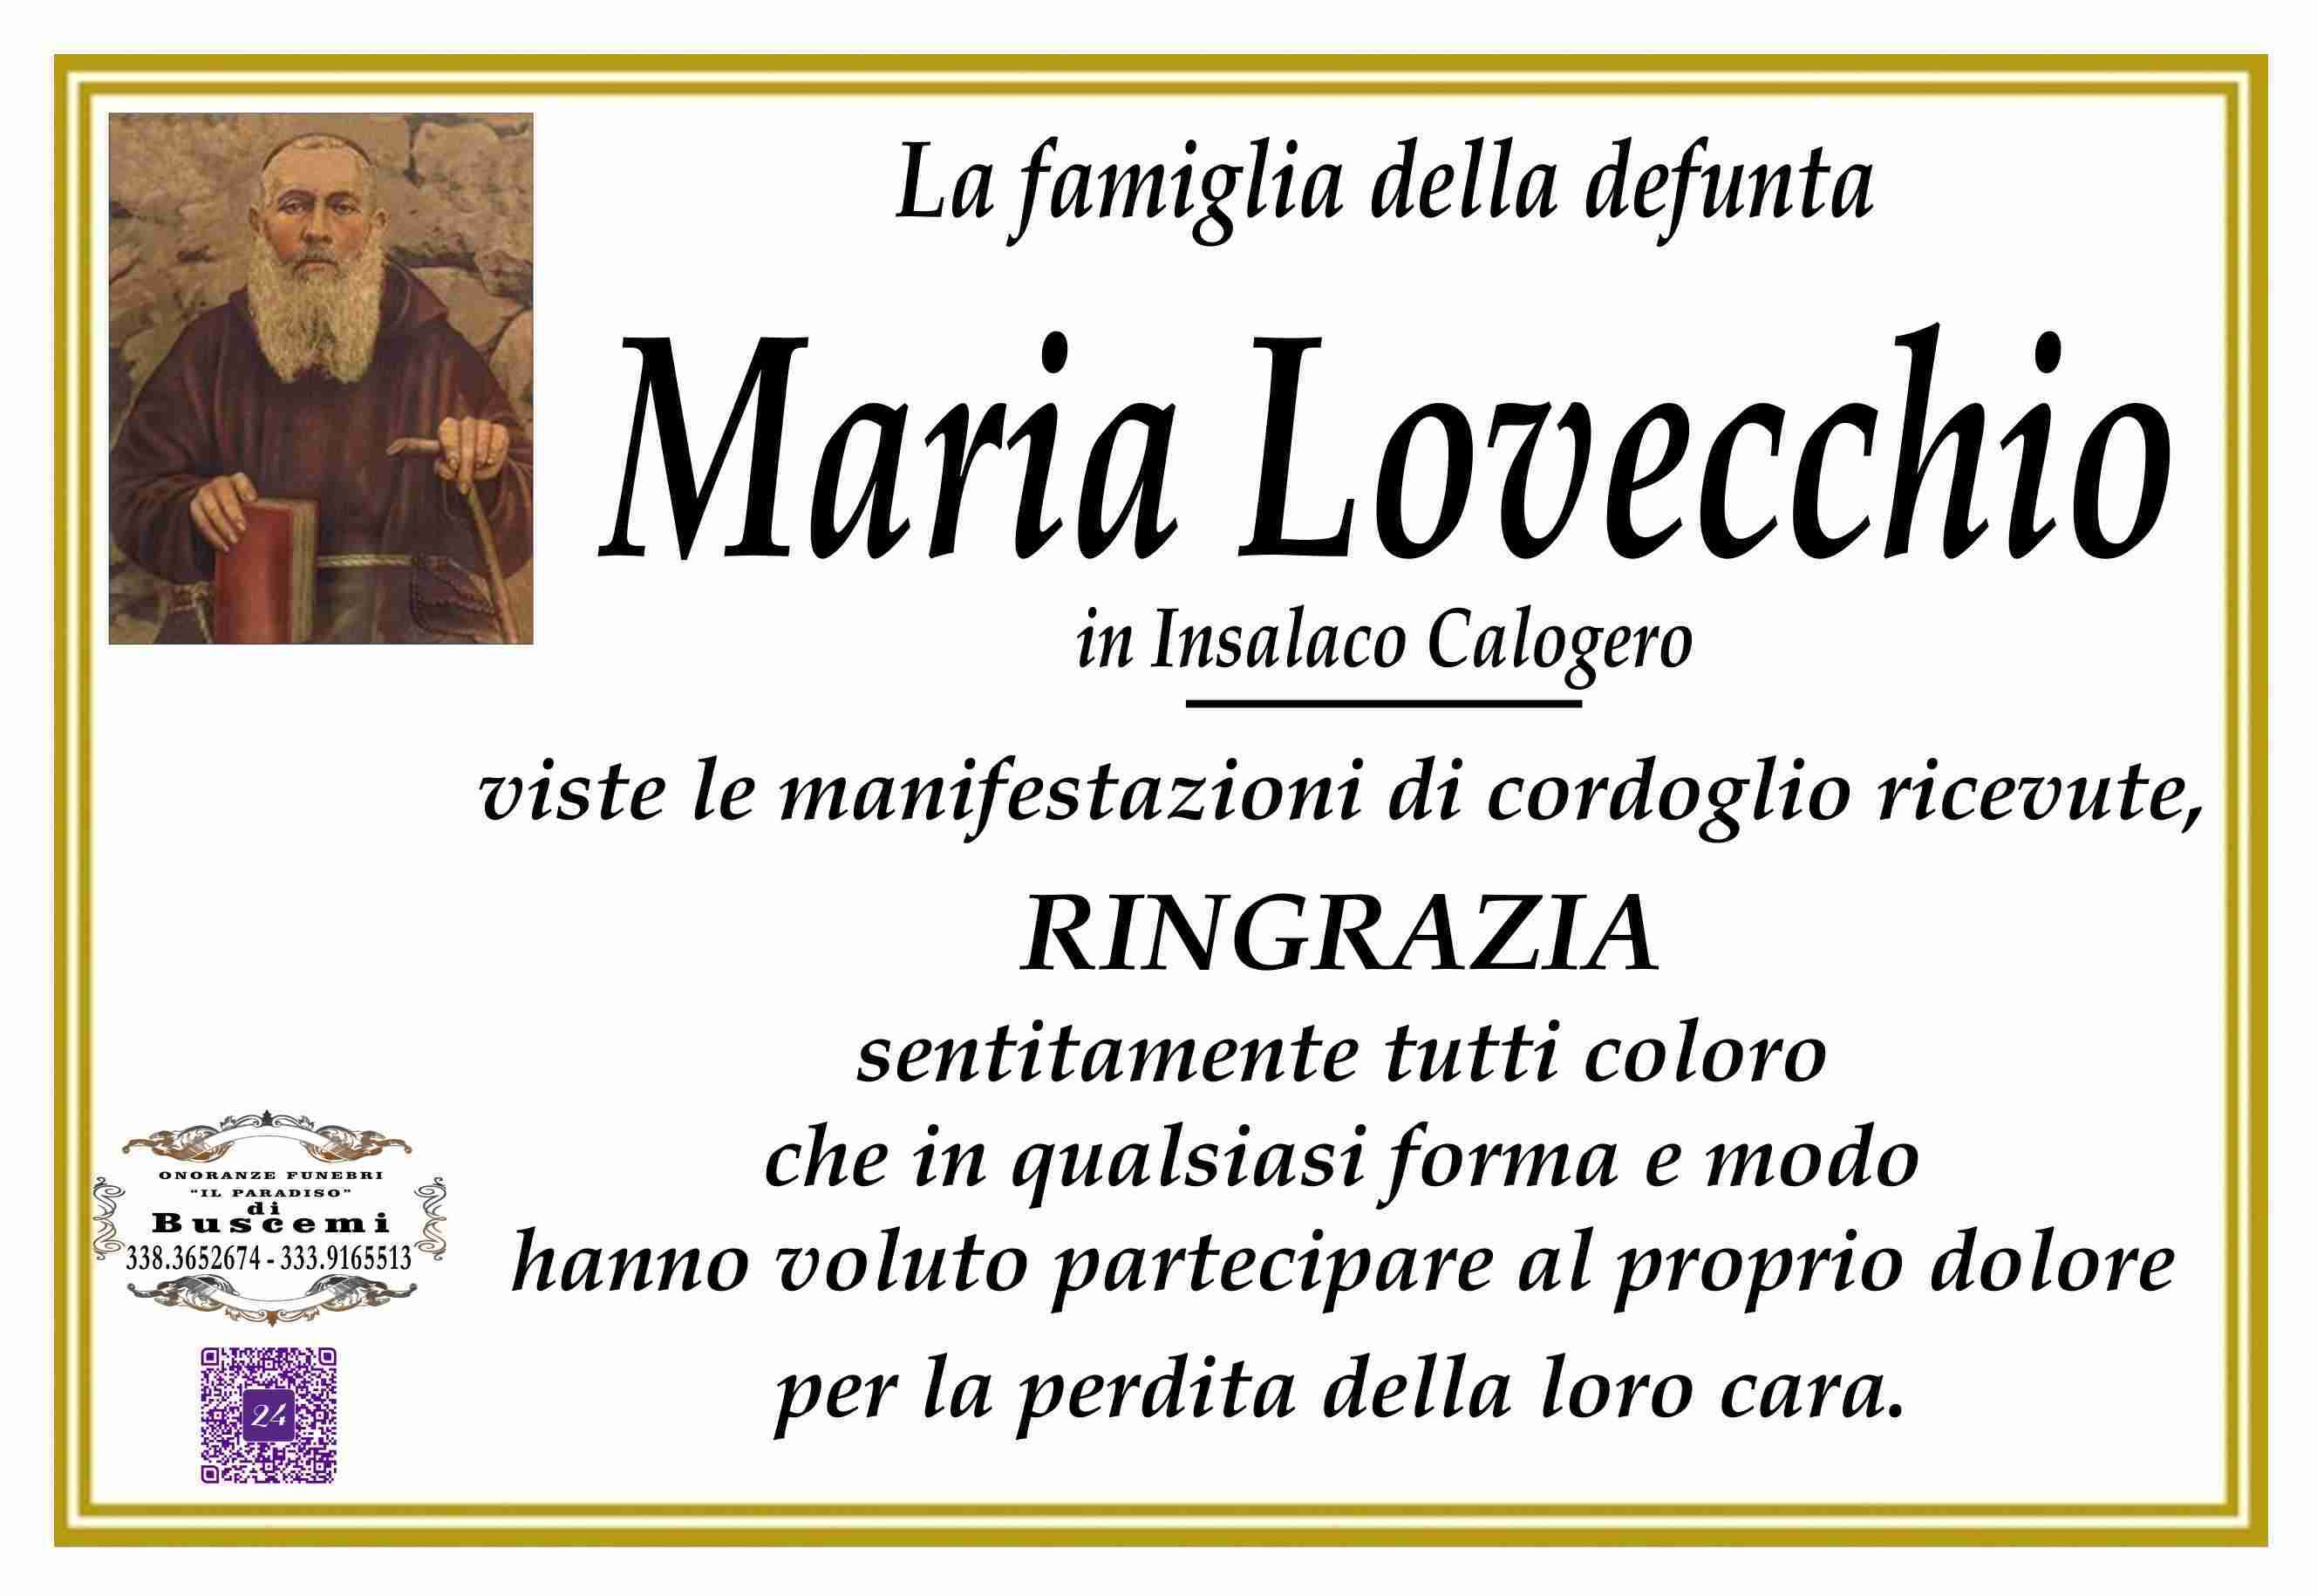 Maria Lovecchio